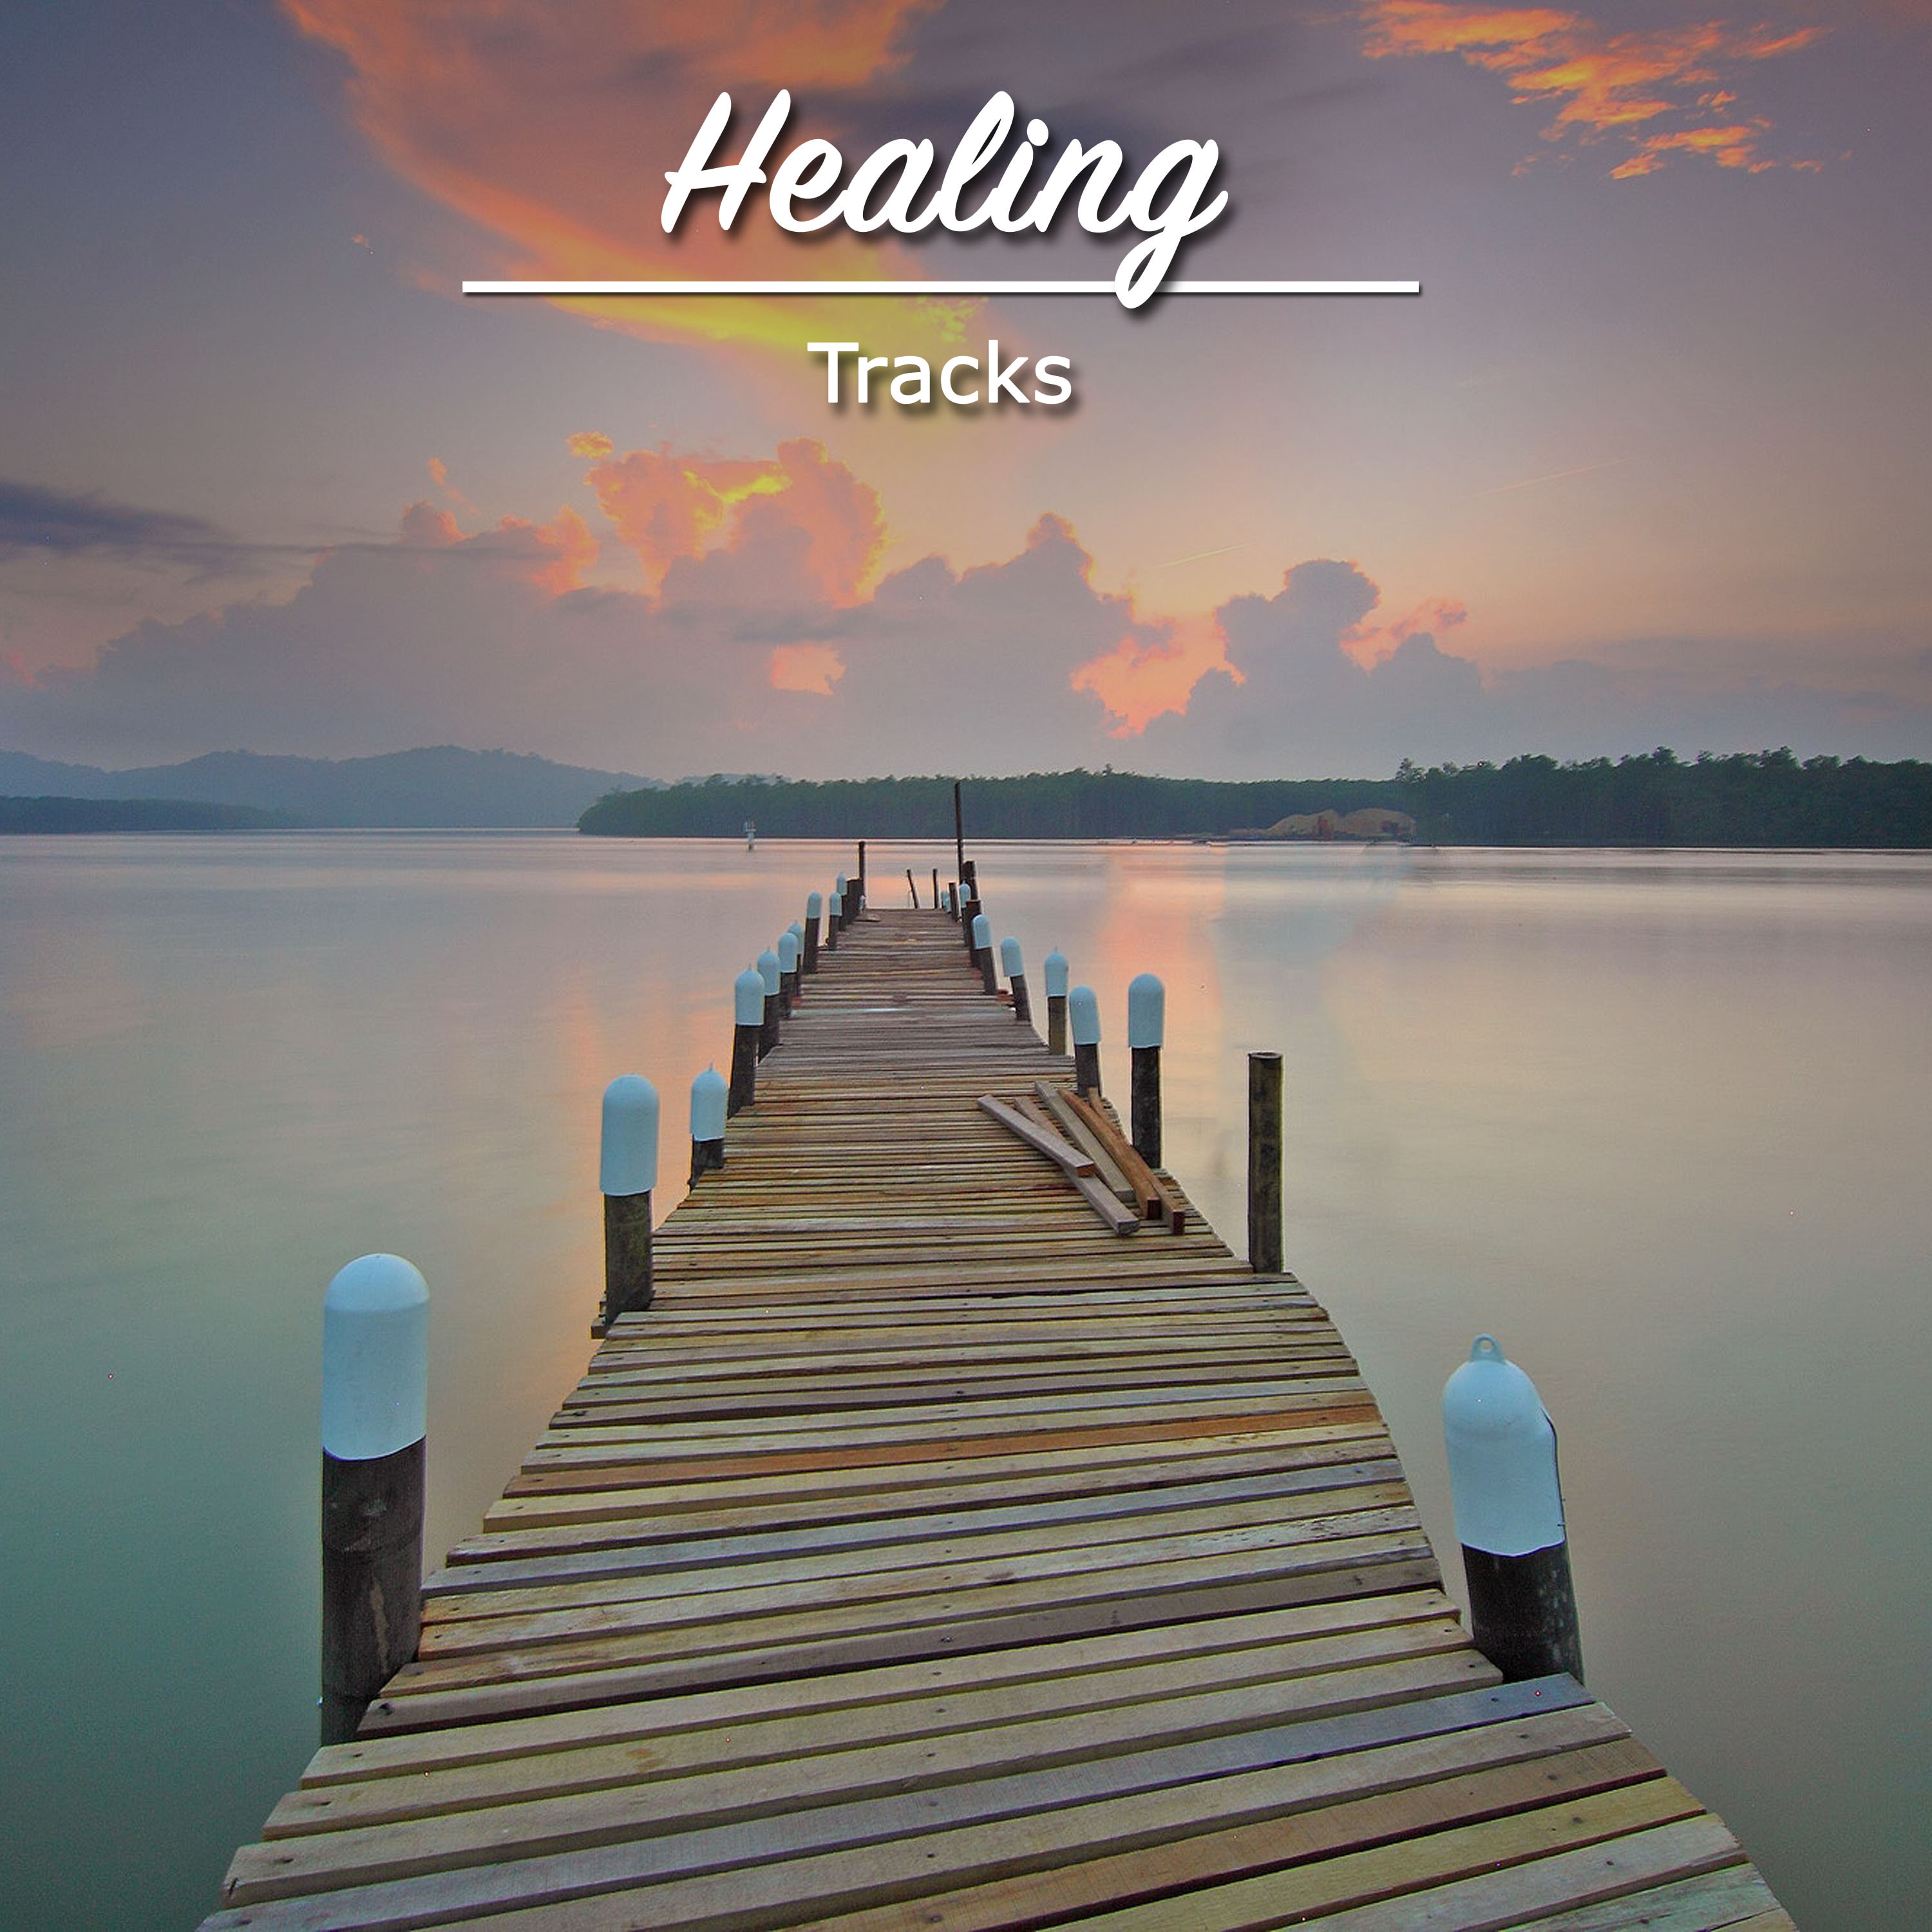 #1 Hour of Healing Tracks for Asian Spa, Meditation & Yoga